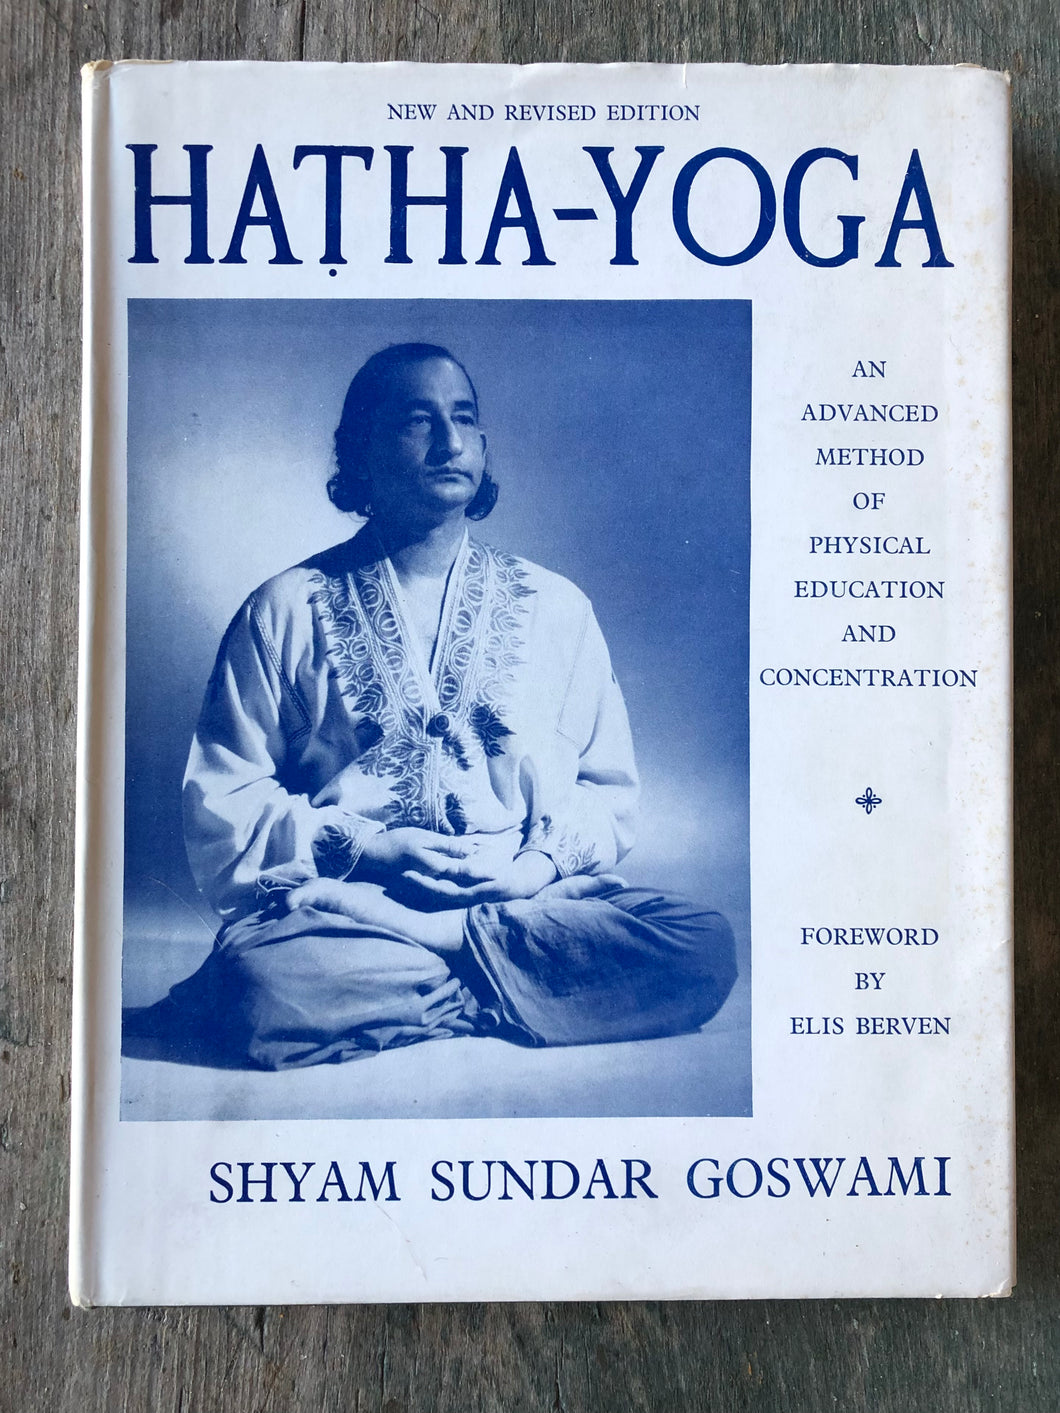 Hatha-Yoga: An Advanced Method of Physical Education and Concentration by Professor Shyam Sundar Goswami